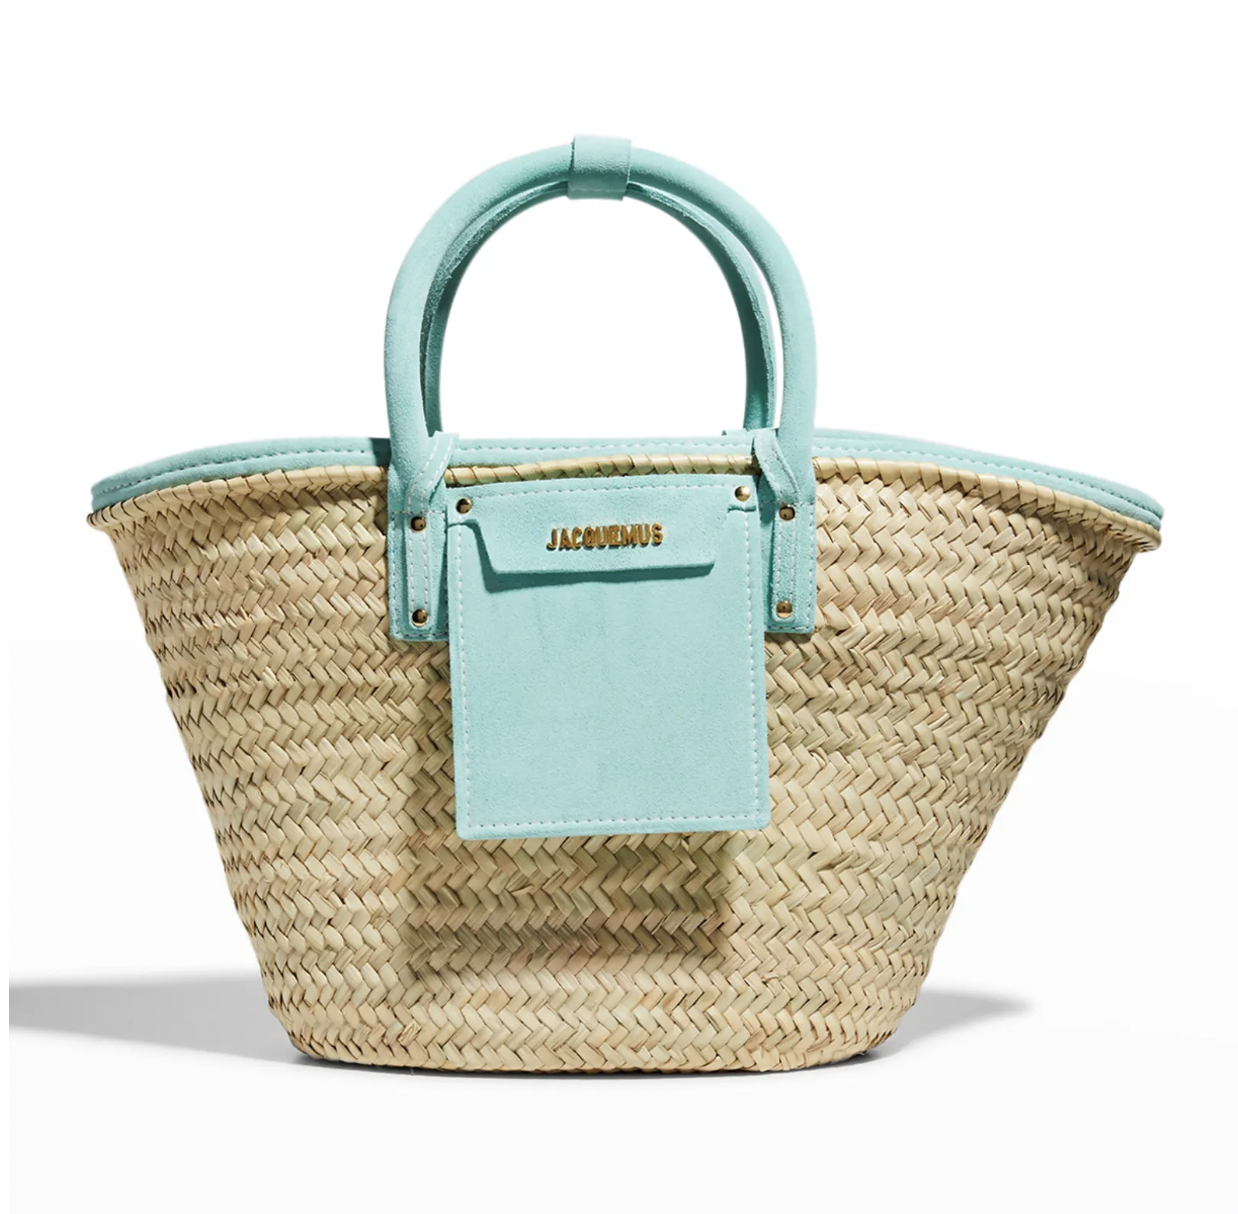 Le Panier Soleil Basket Bag with Suede Trim- neiman marcus - handbag - fashion accessories - straw bag - glorious bag